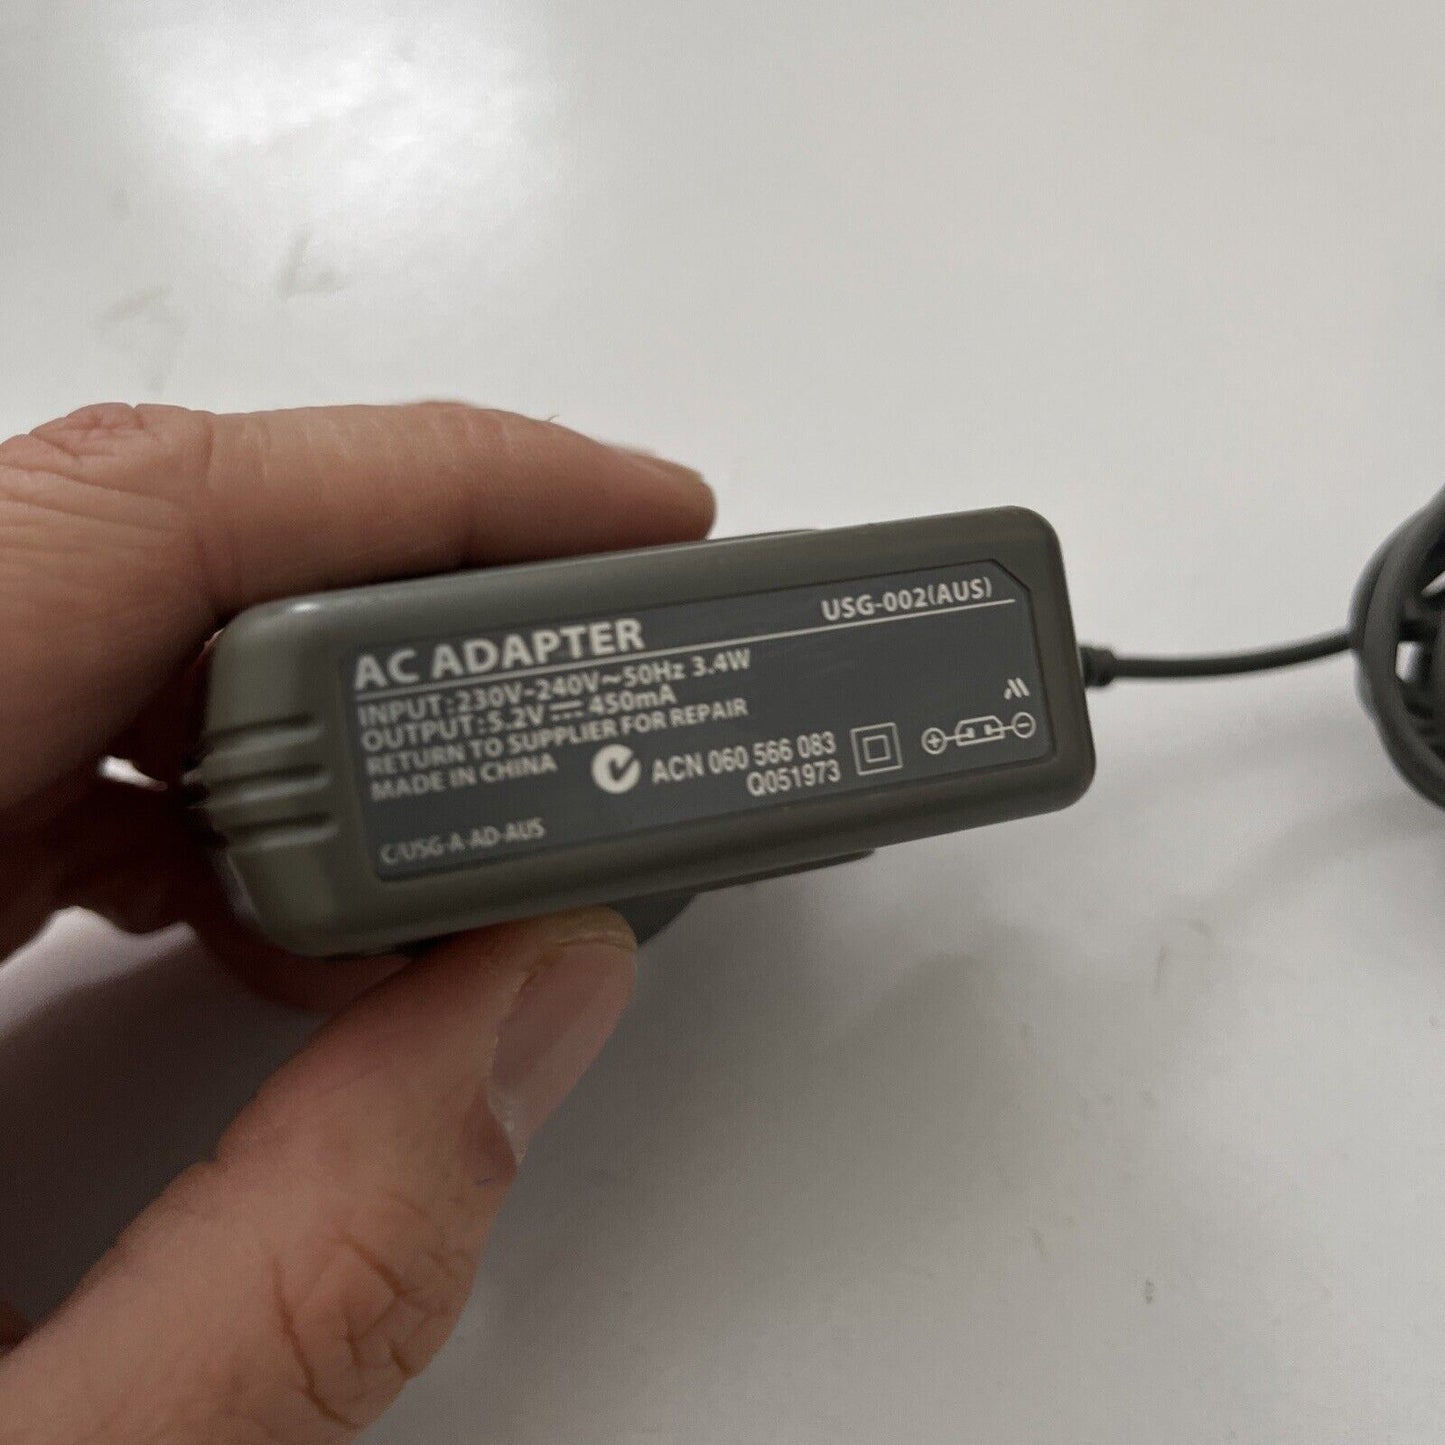 Genuine Official Nintendo DS Lite Charger USG-002(AUS) AC Adaptor Power Supply